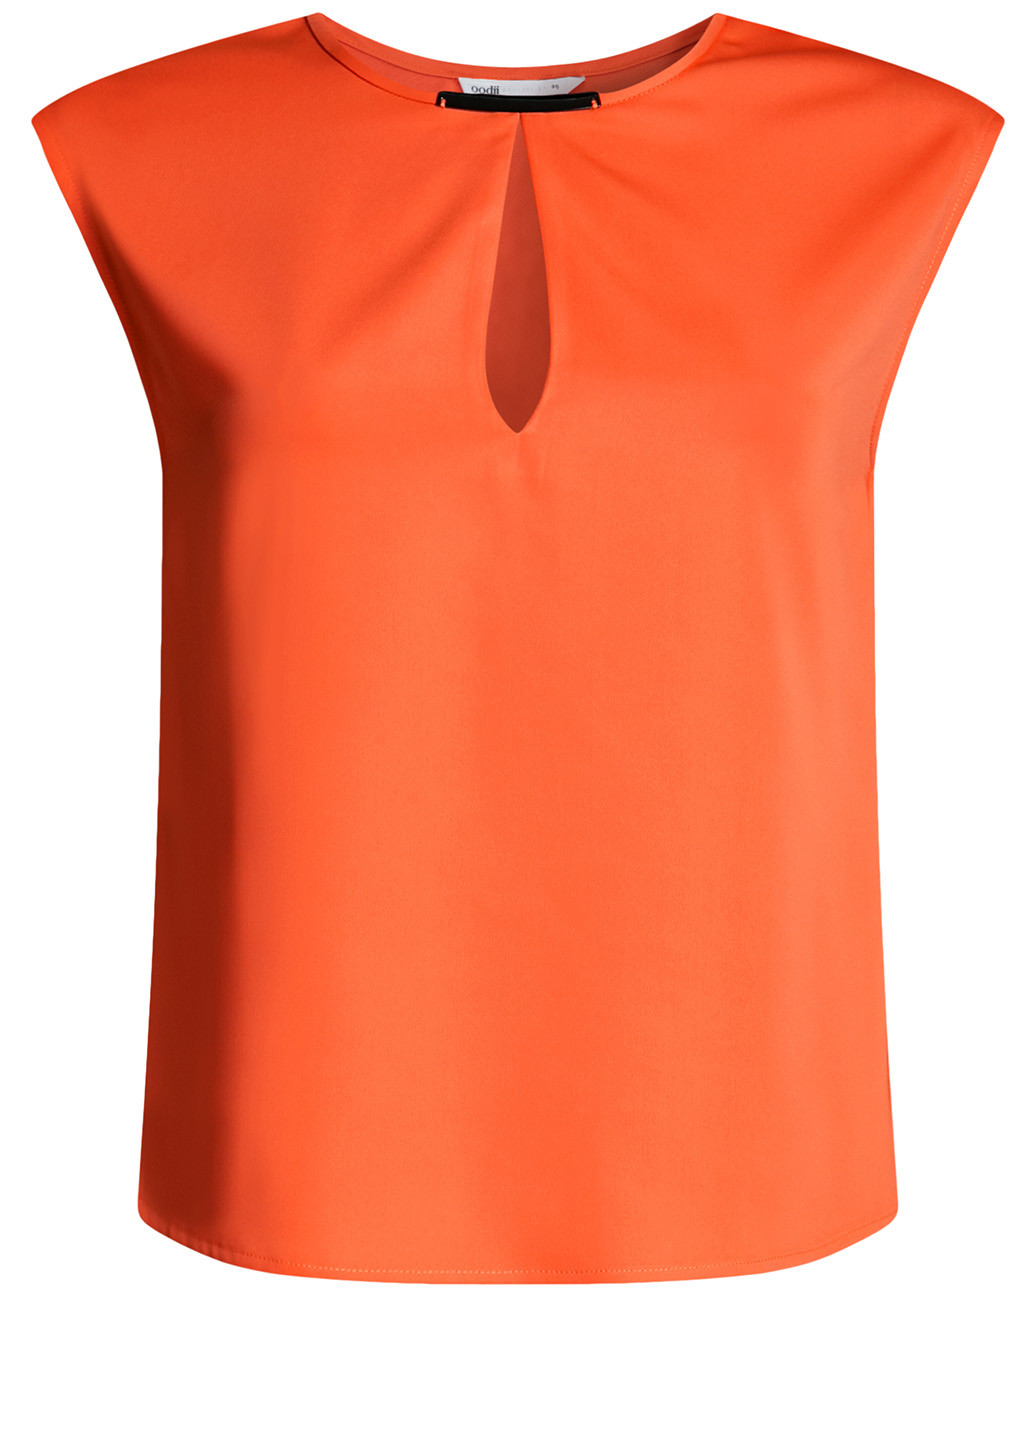 Оранжево-красная летняя блуза Oodji